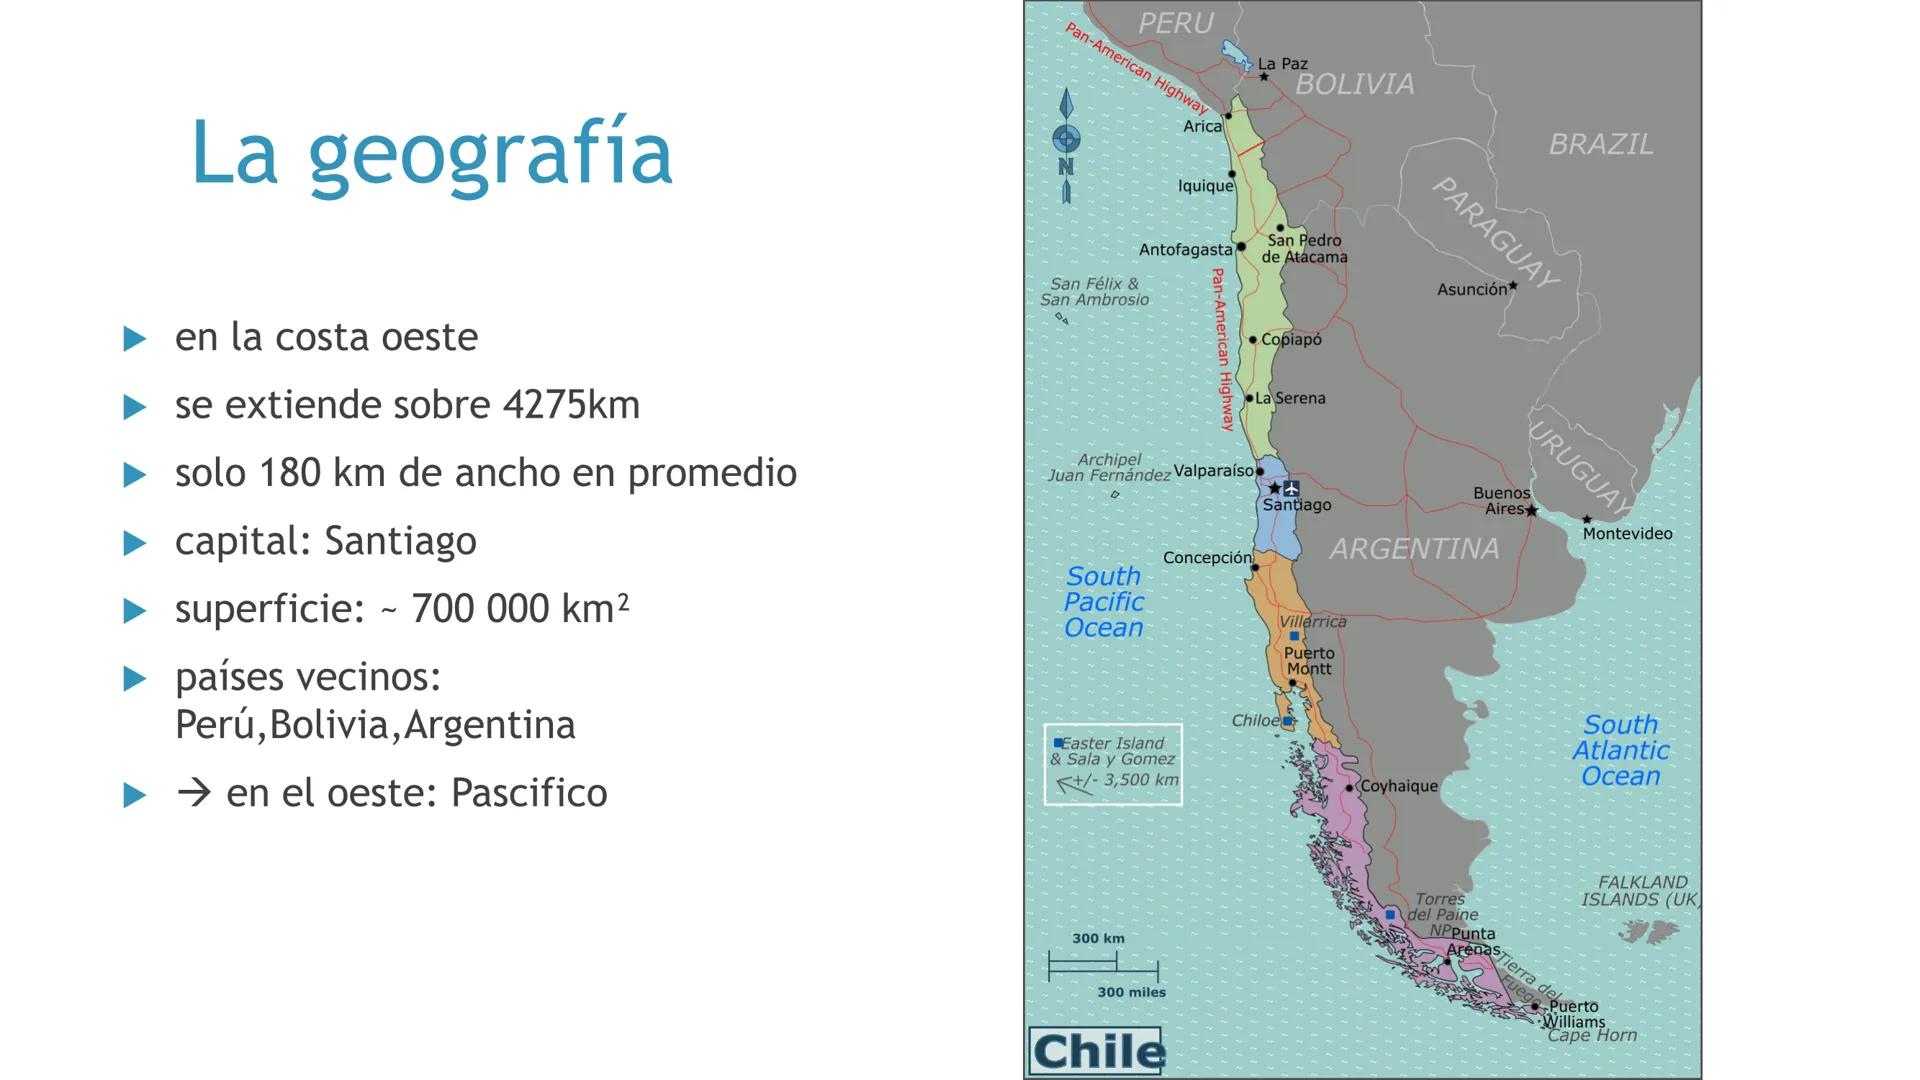 Chile
un país de latinoamérica
https://www.flaggenmeer.de/media/image/57/c6/7e/flagg
e-chile-querformat.jpg
GMMMMD
POR LA RAZON O LA FUERZA
